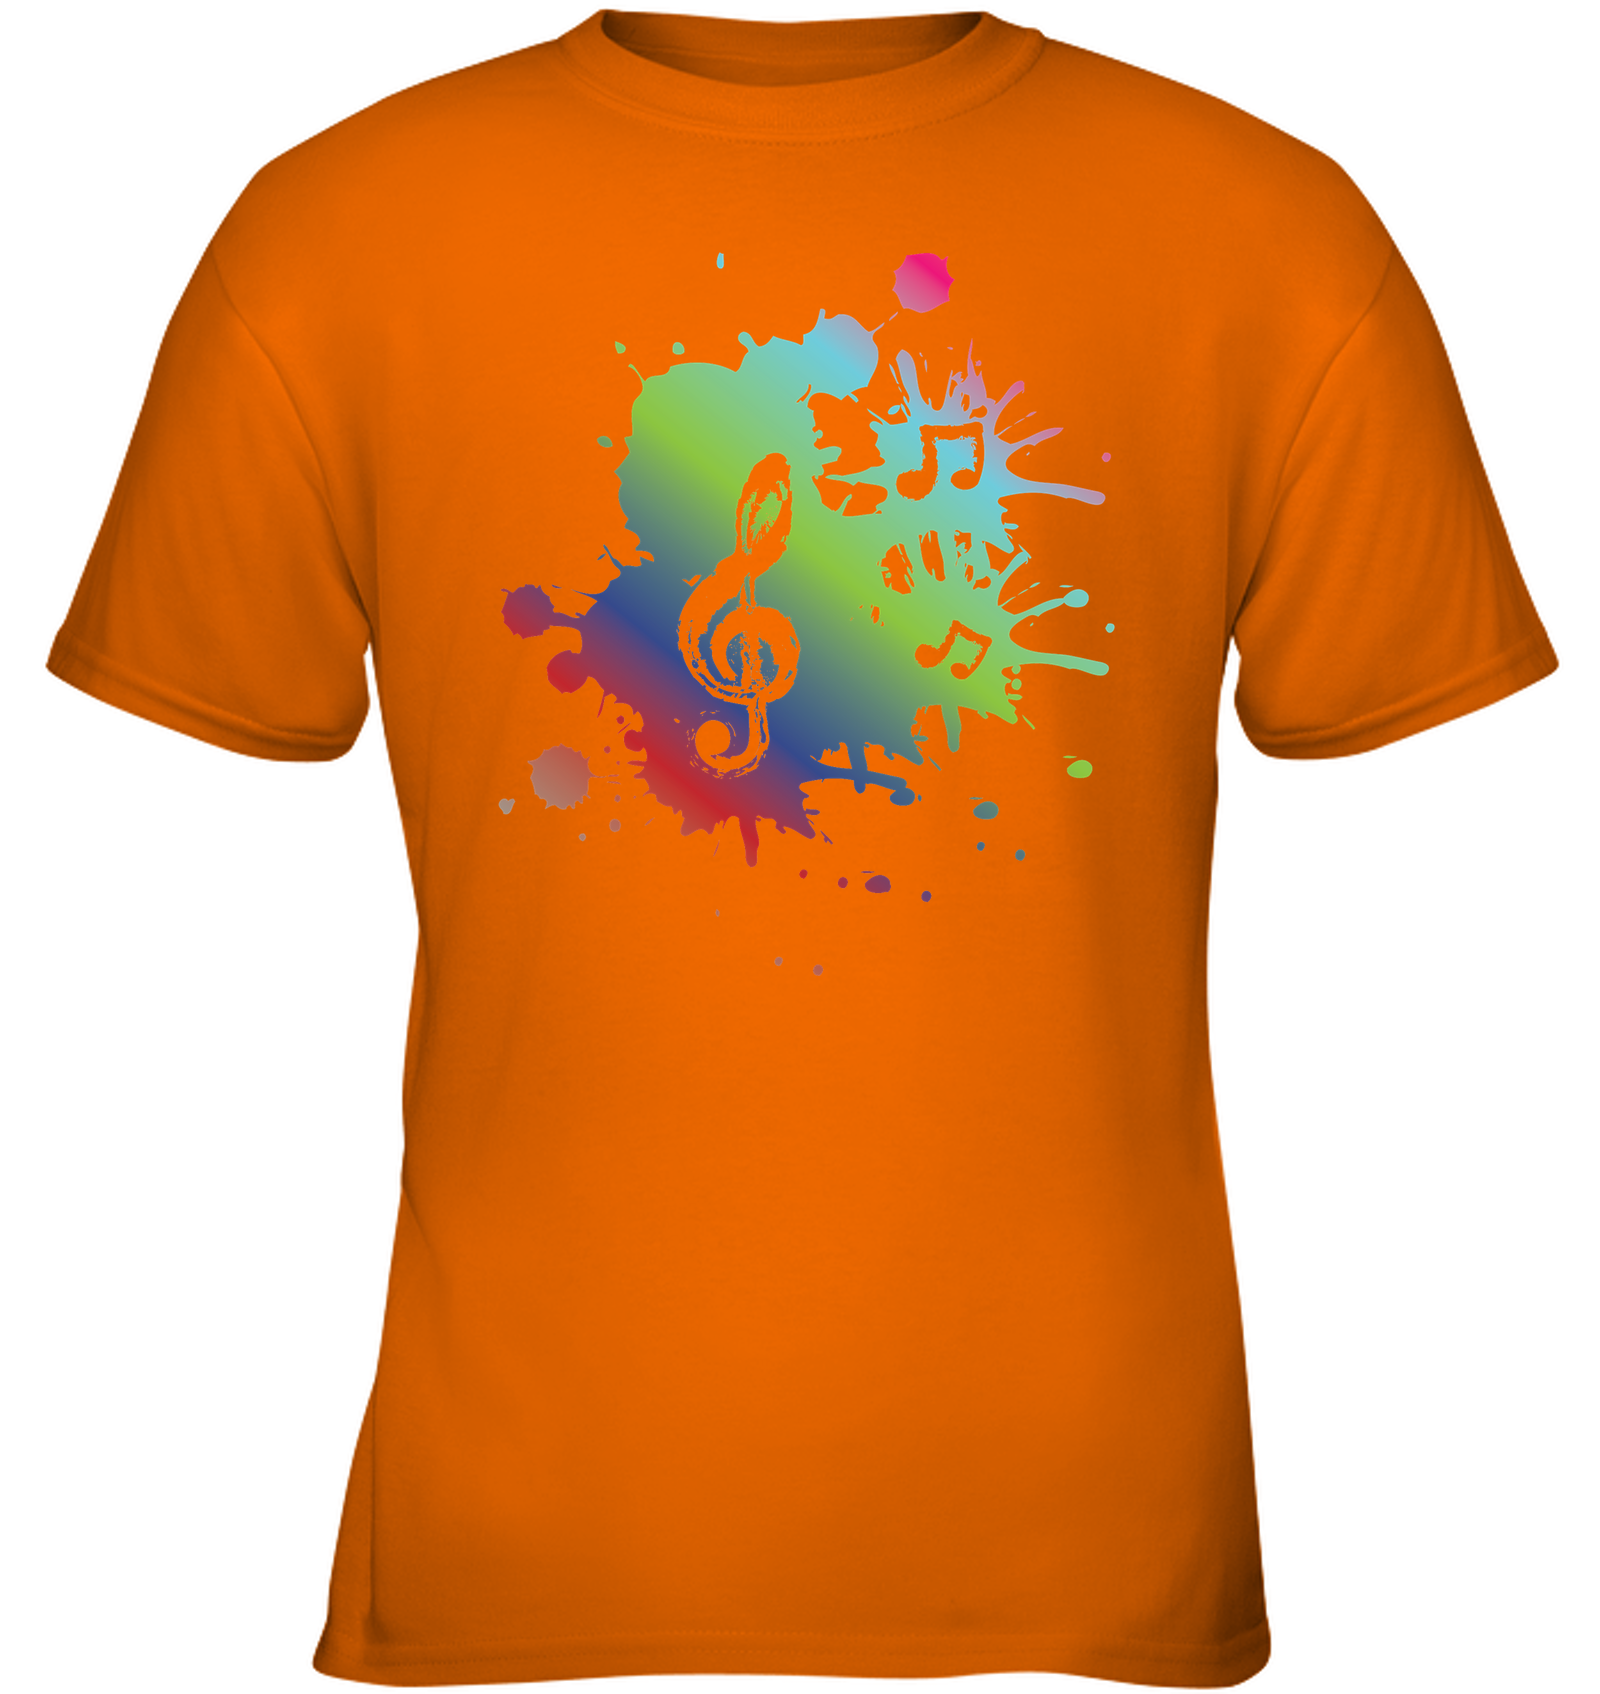 A Colorful Splash of Music - Gildan Youth Short Sleeve T-Shirt